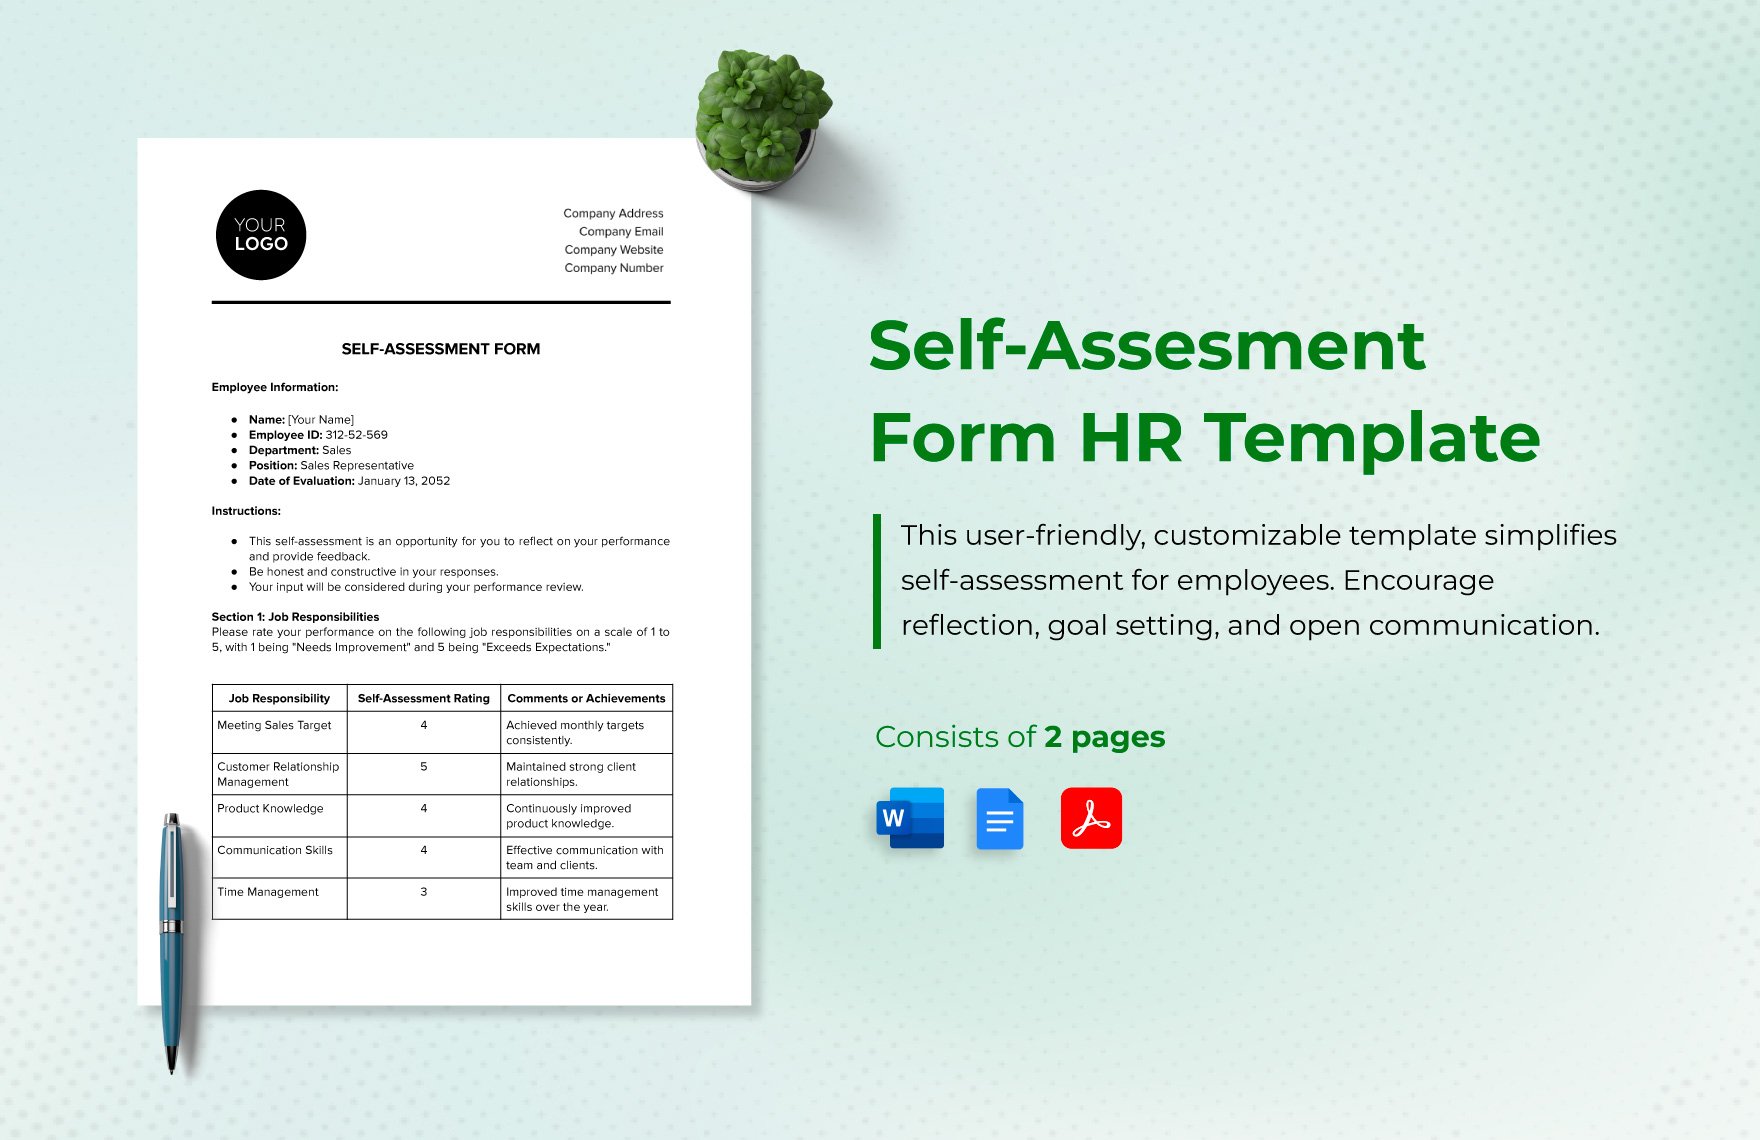 Self-assessment Form HR Template